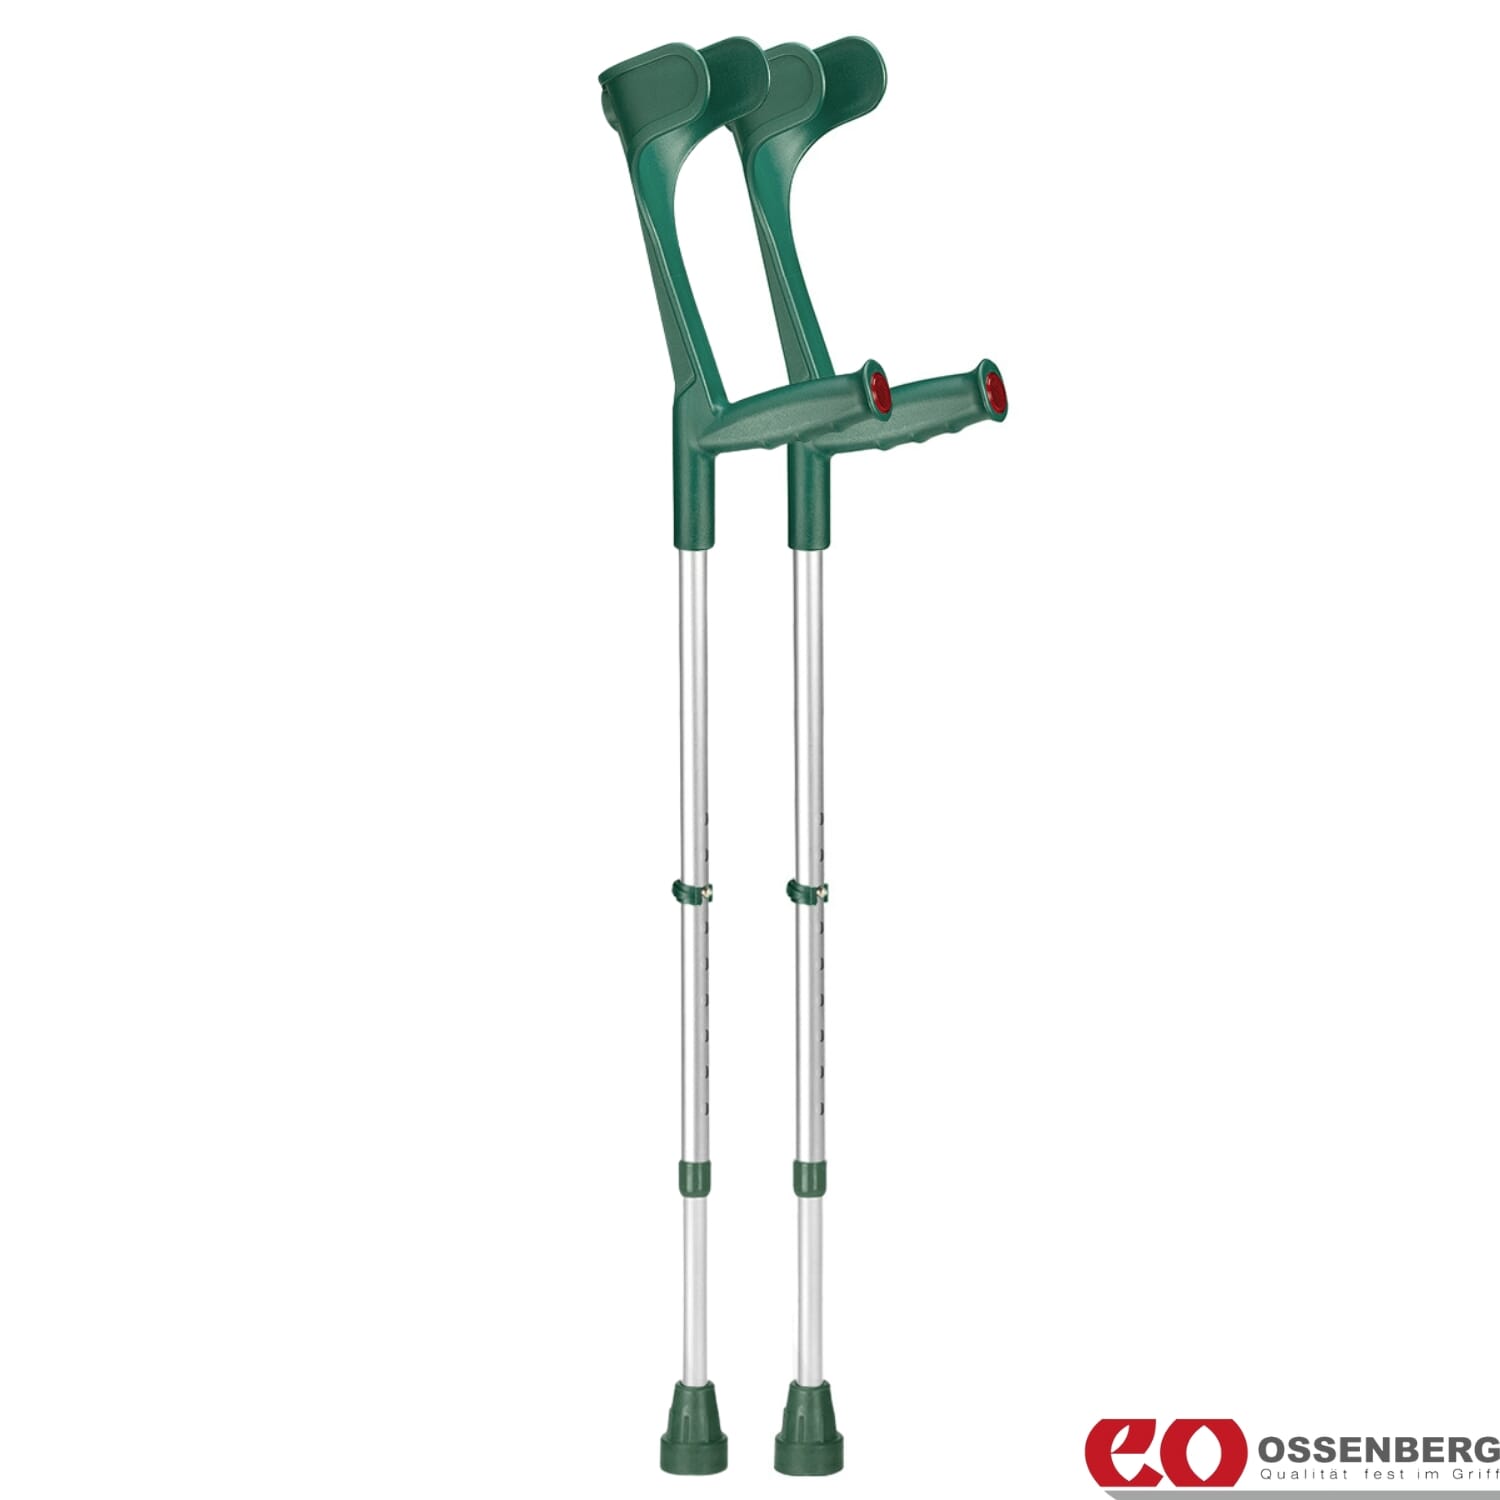 View Ossenberg Open Cuff Crutches Green Pair information